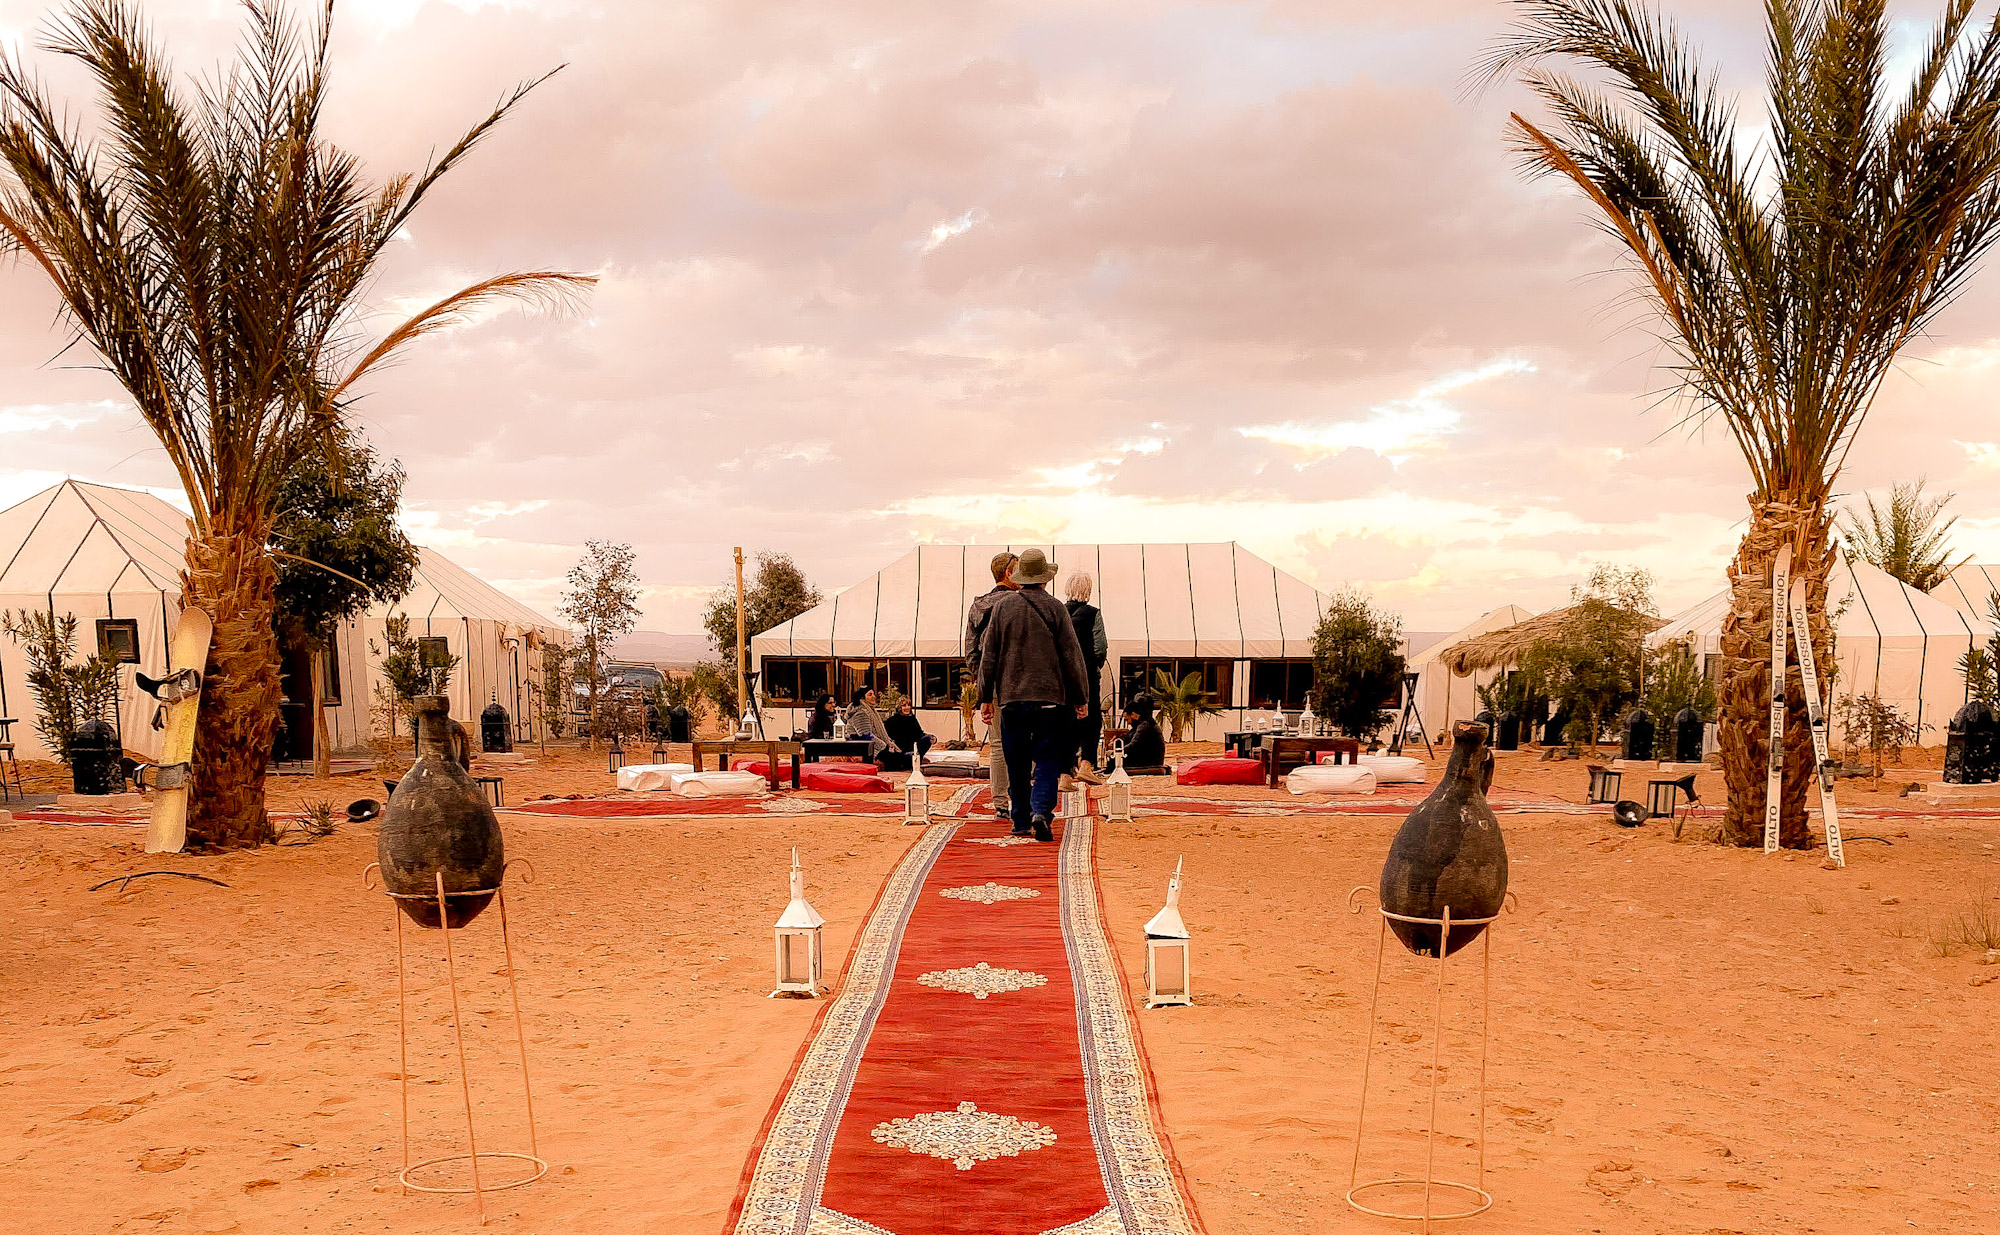 Sahara Stars Desert Camp, Merzouga, Morocco